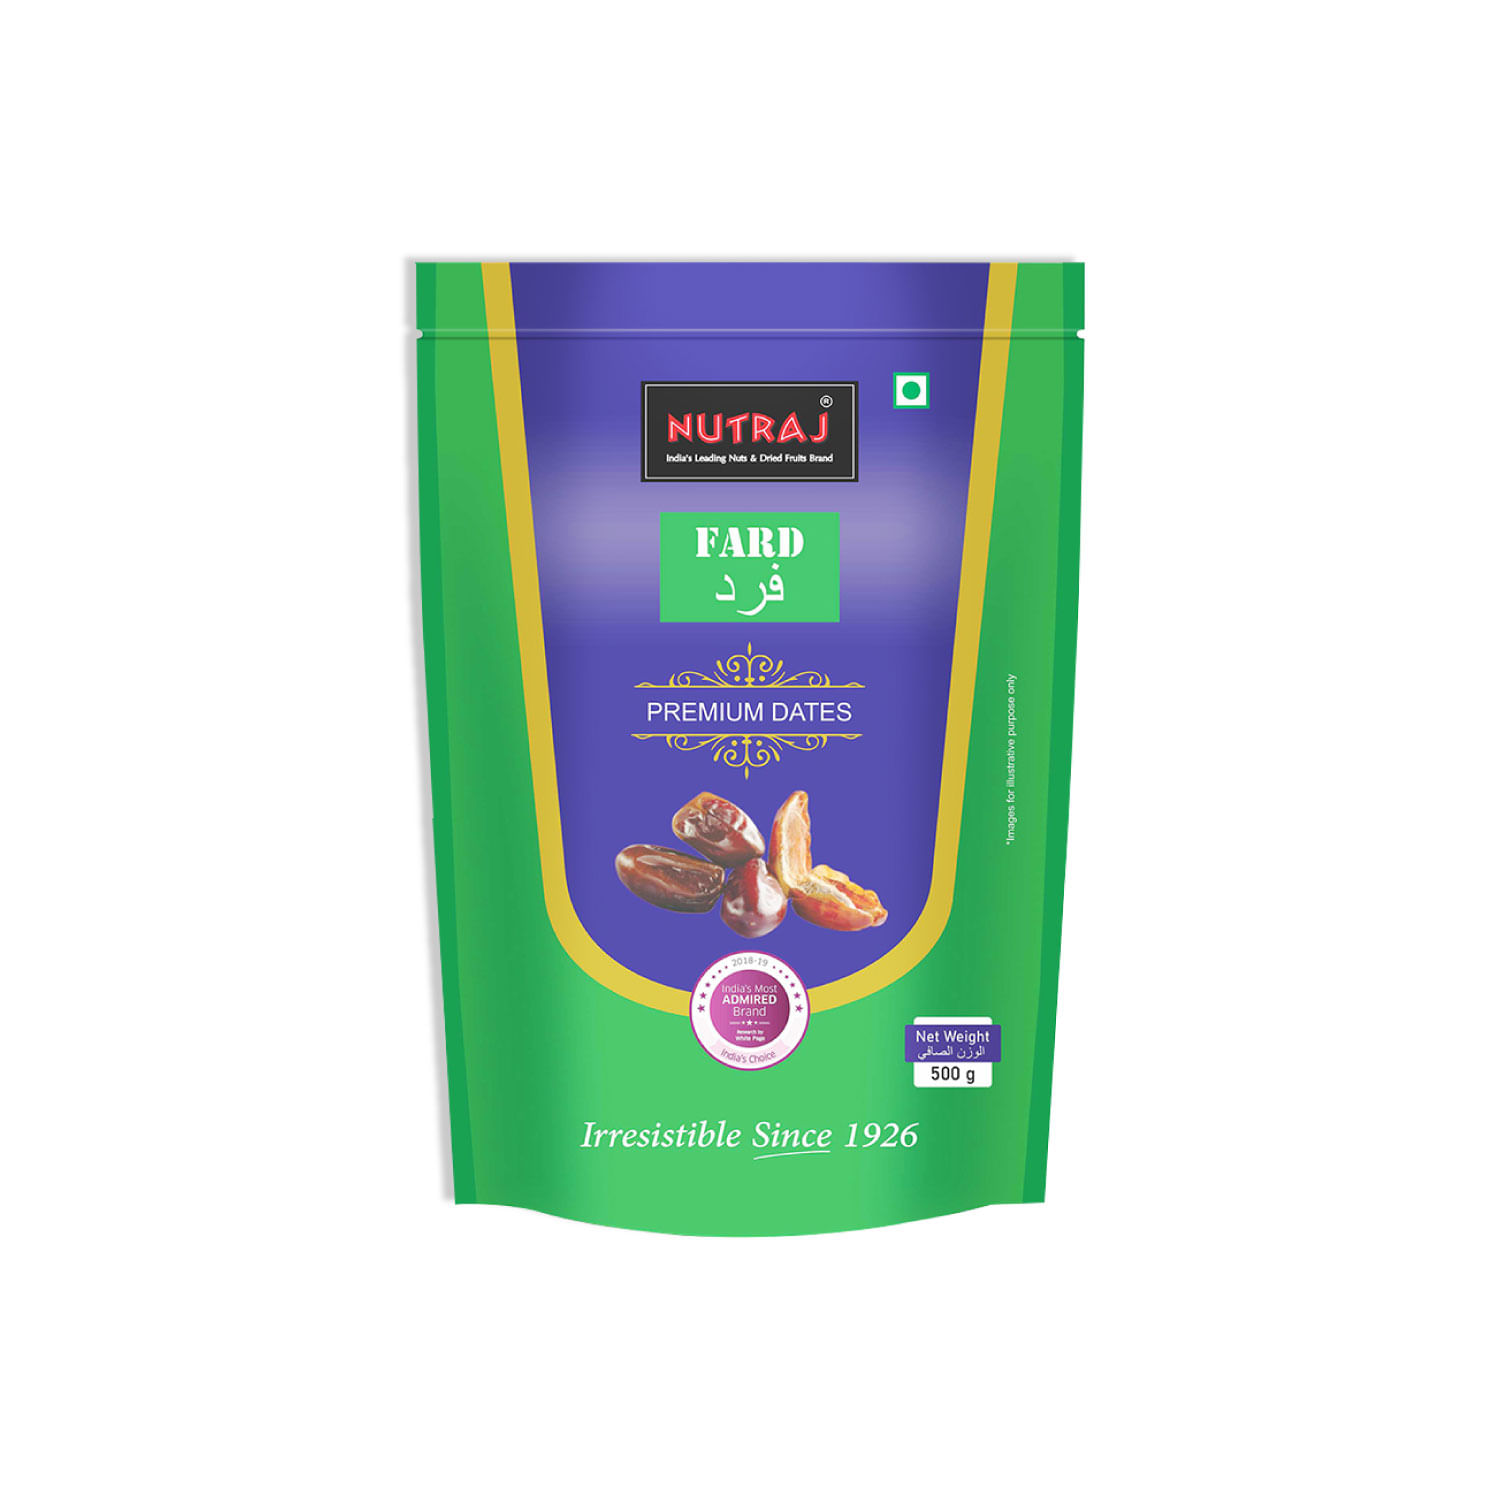 Nutraj Fard Premium Dates (500g) and Nutraj Signature Dried Figs (Anjeer) (400g) - Vacuum Pack - 900g